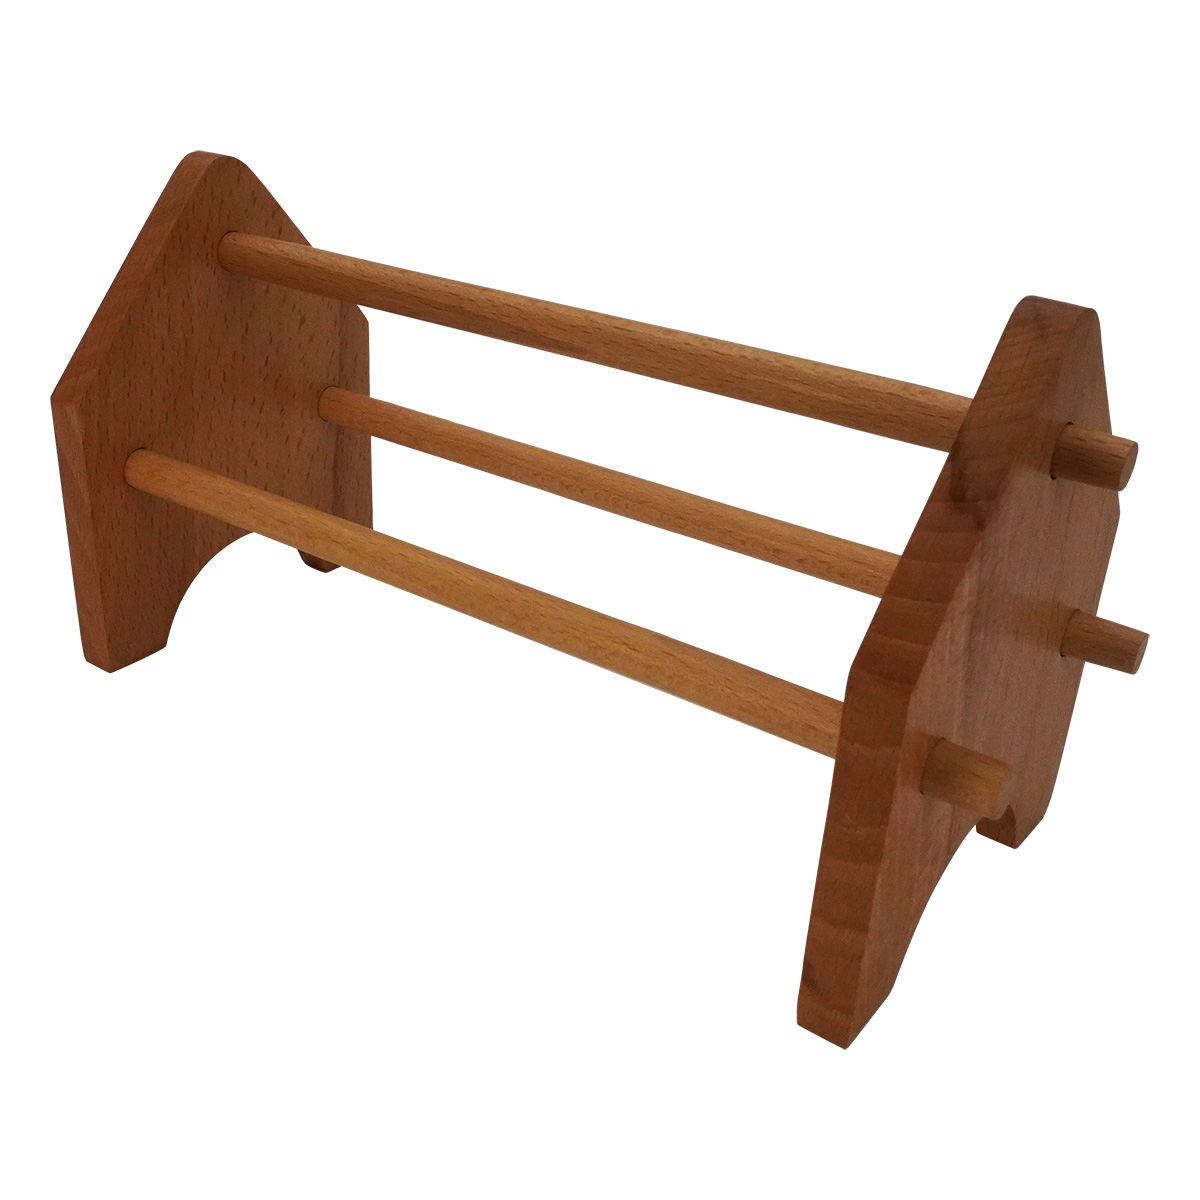 HOL-310.00 - Collapsible Premium Wood Plier Rack